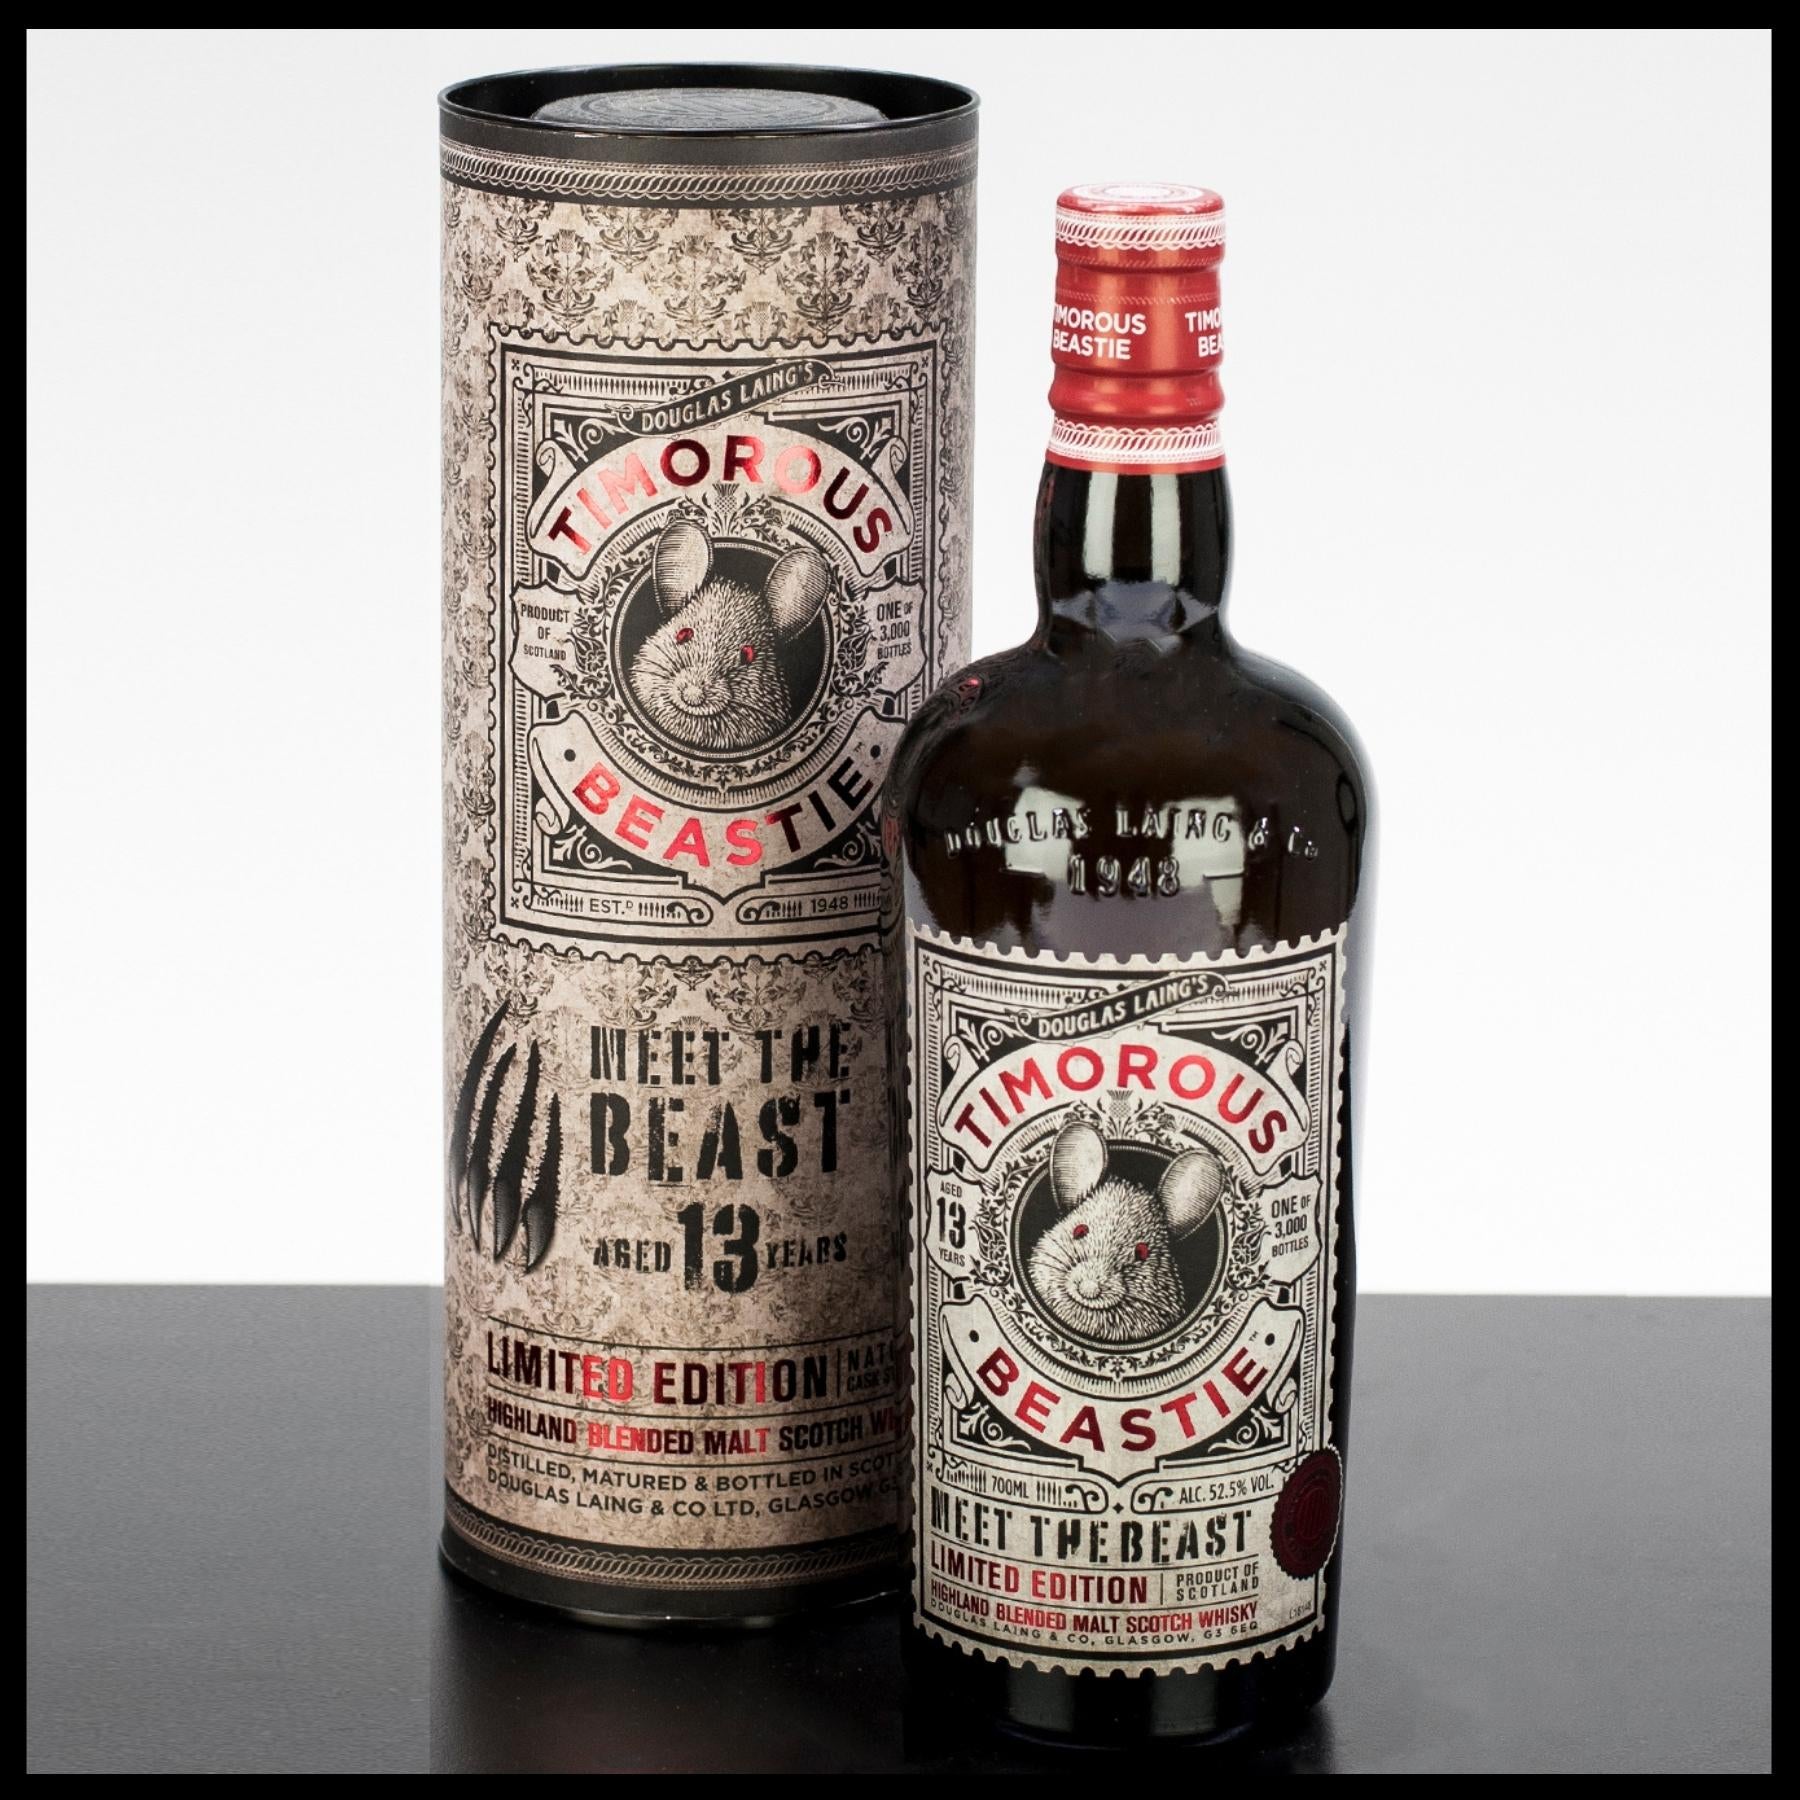 Timorous Beastie 13 YO Meet the Beast Limited Edition Whisky 0,7L - 52,5% Vol. - Trinklusiv